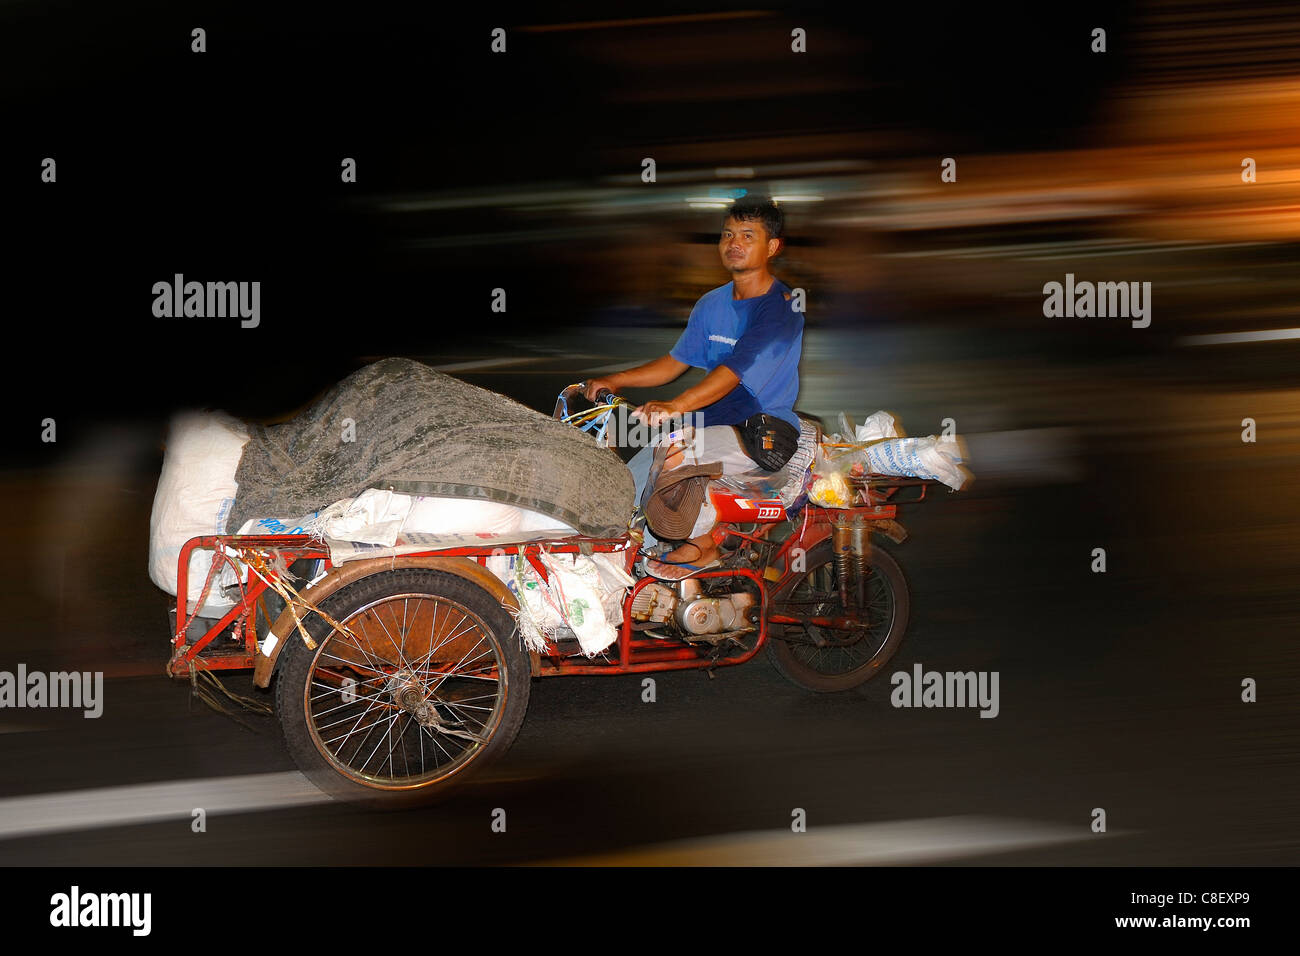 Bicycle, Rickshaw, at night, Old, City, town, Bangkok, Thailand, Asia, transport Stock Photo